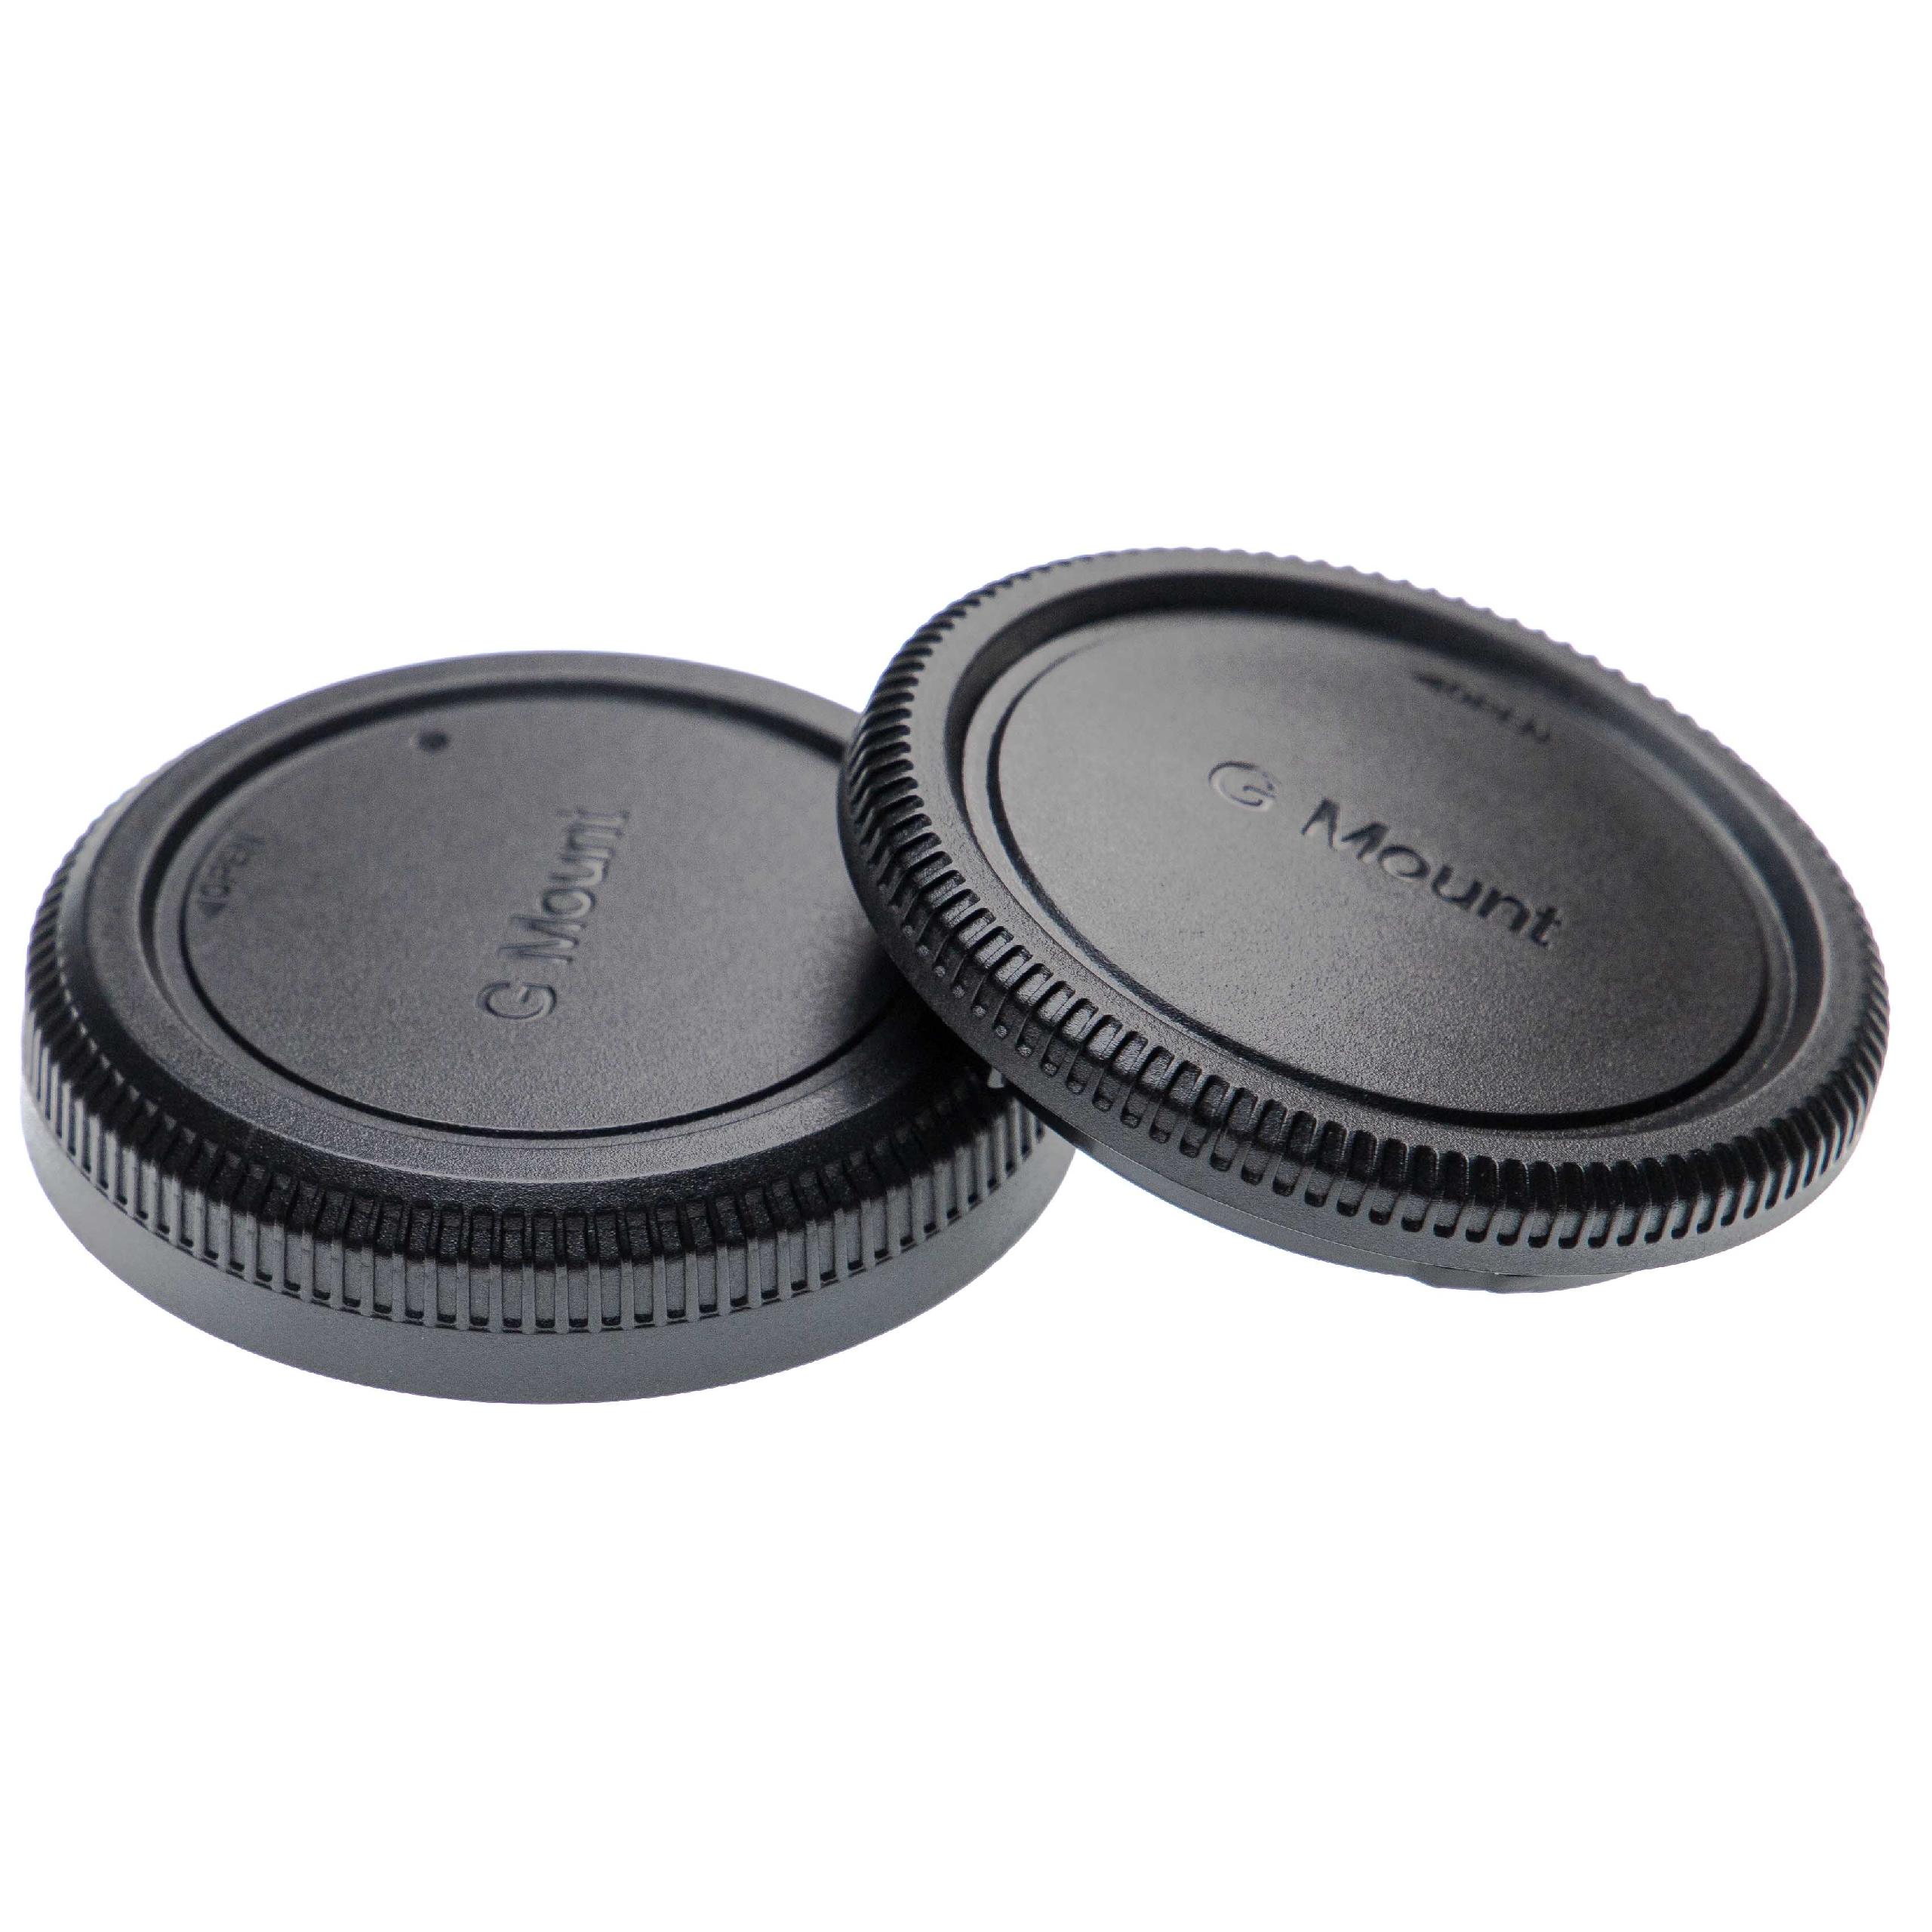 Rear Lens & Housing Protector suitable for Fujifilm GFX Camera